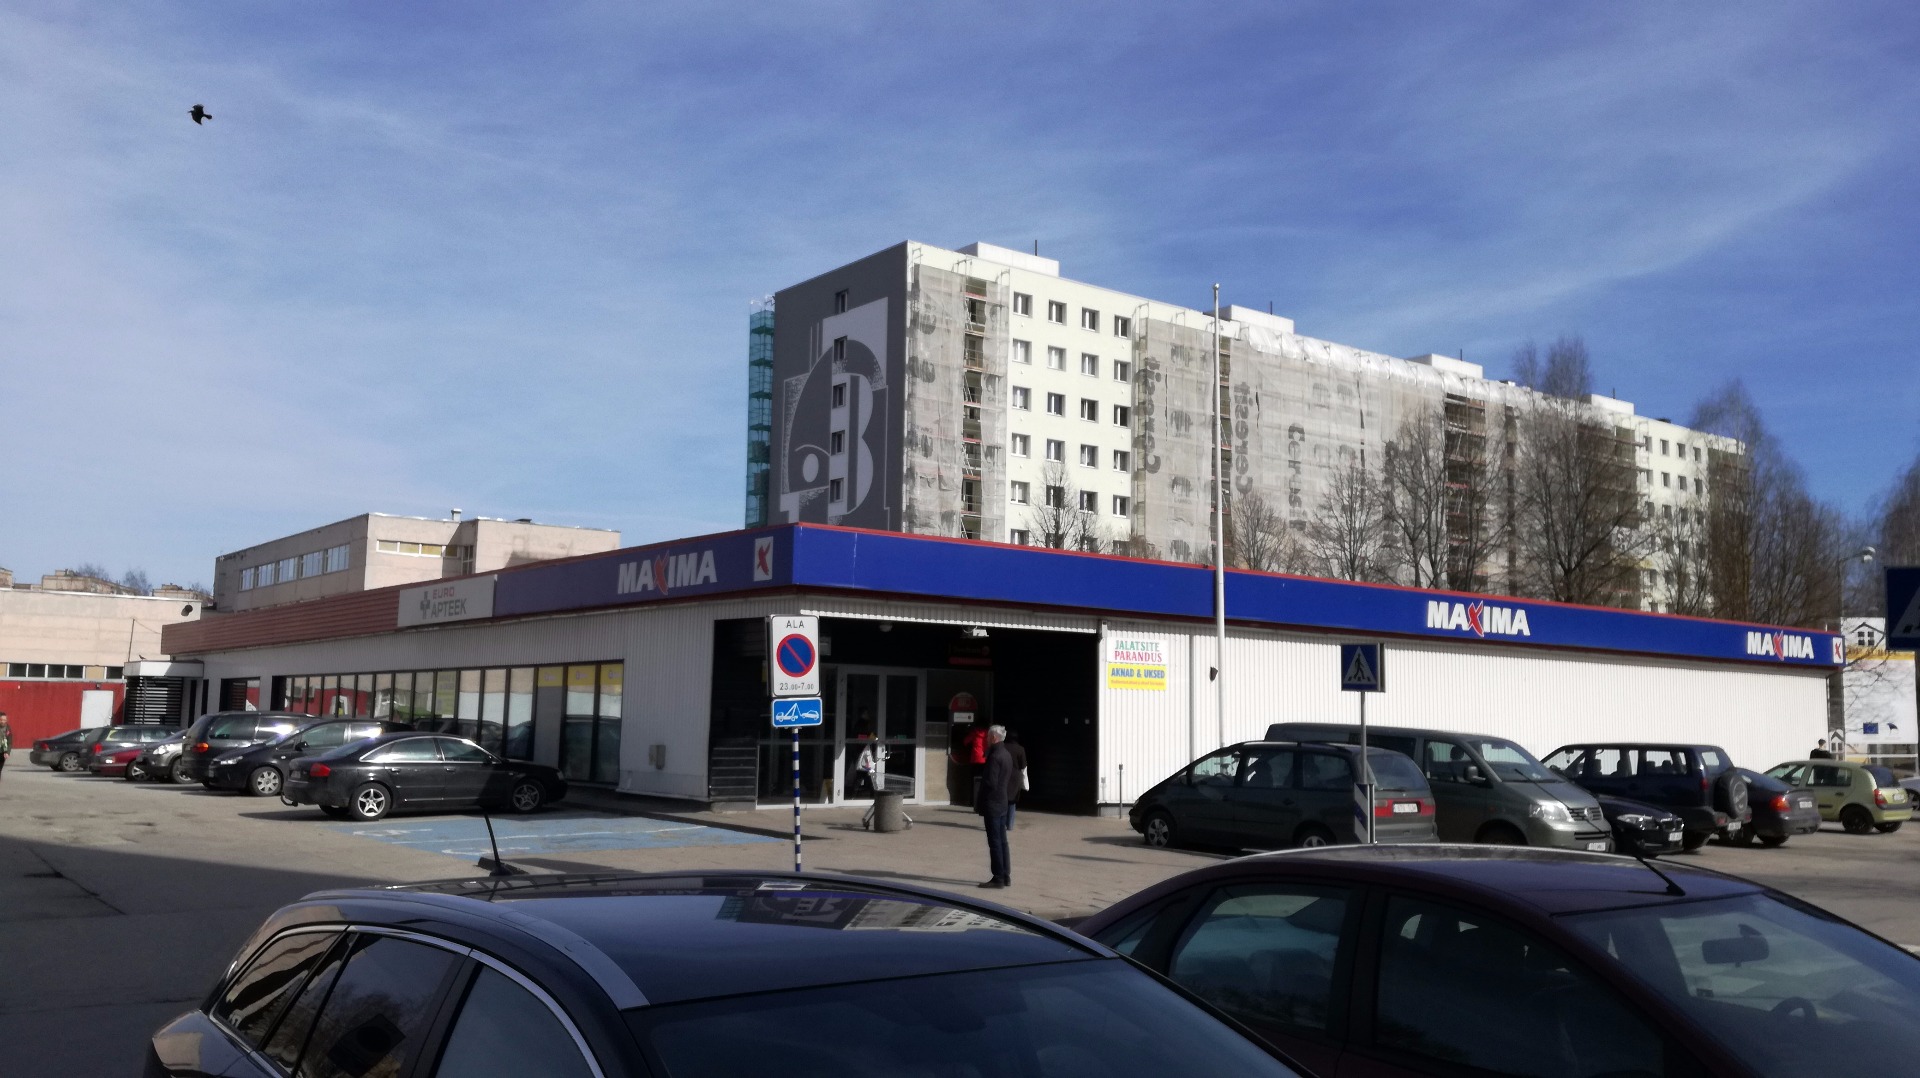 Tartu Annelinn: Anne store, 5-storey apartments rephoto